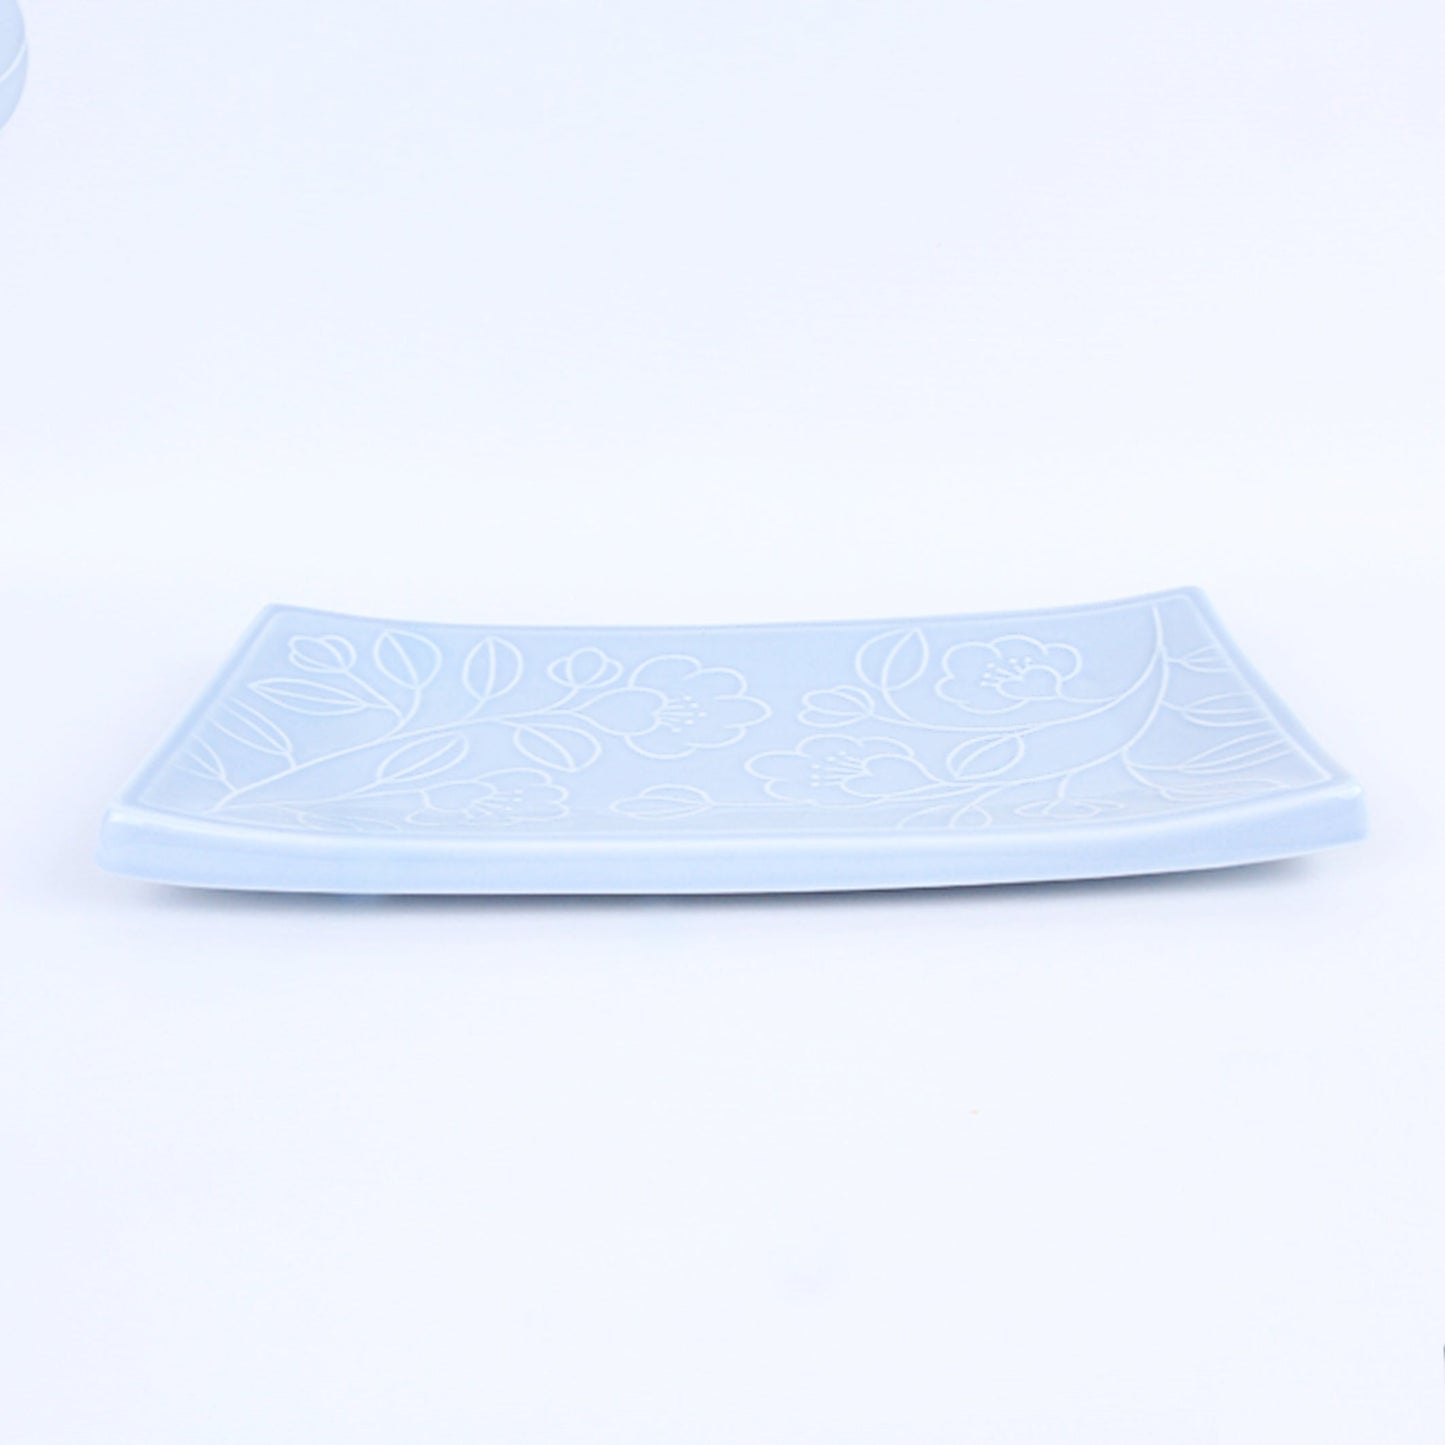 Refreshing Rectangular Plate 300mm (Sky Blue Color)𝟭 𝗣𝗹𝘂𝘀 𝟭